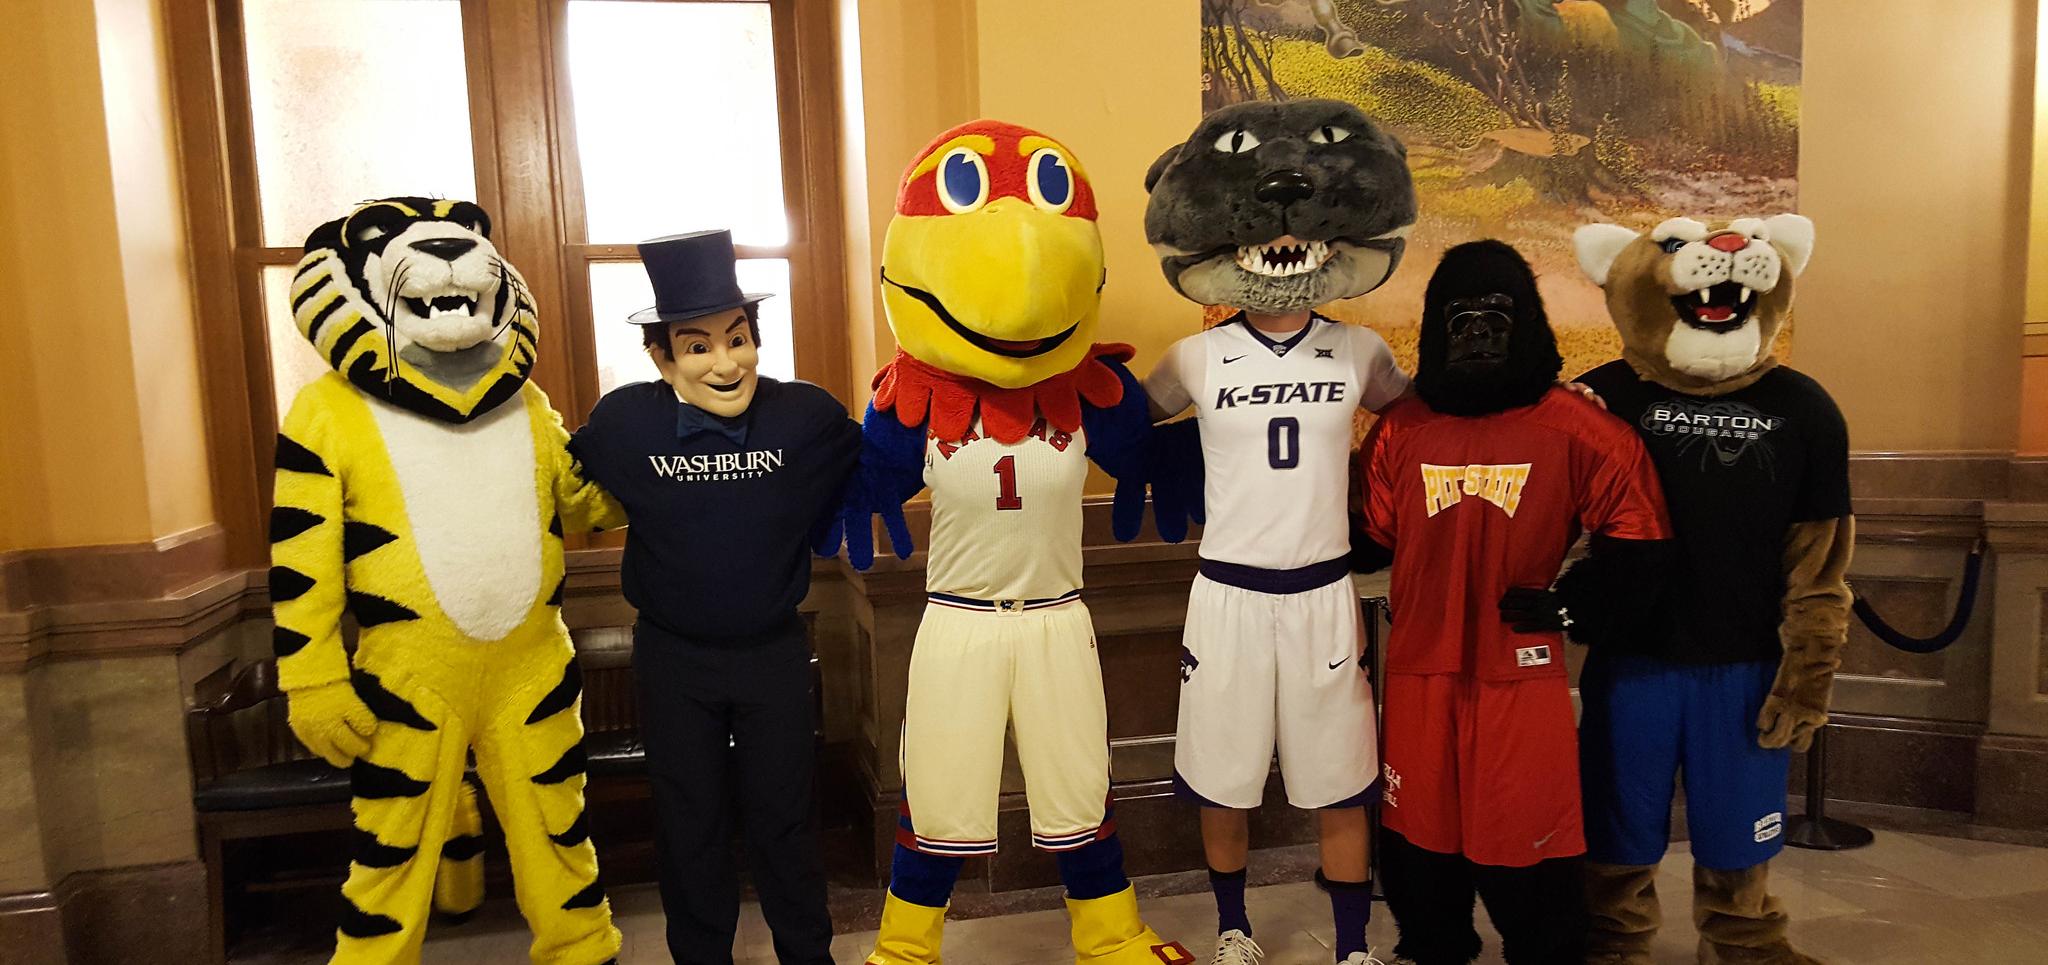 Bart poses with other Kansas University mascots